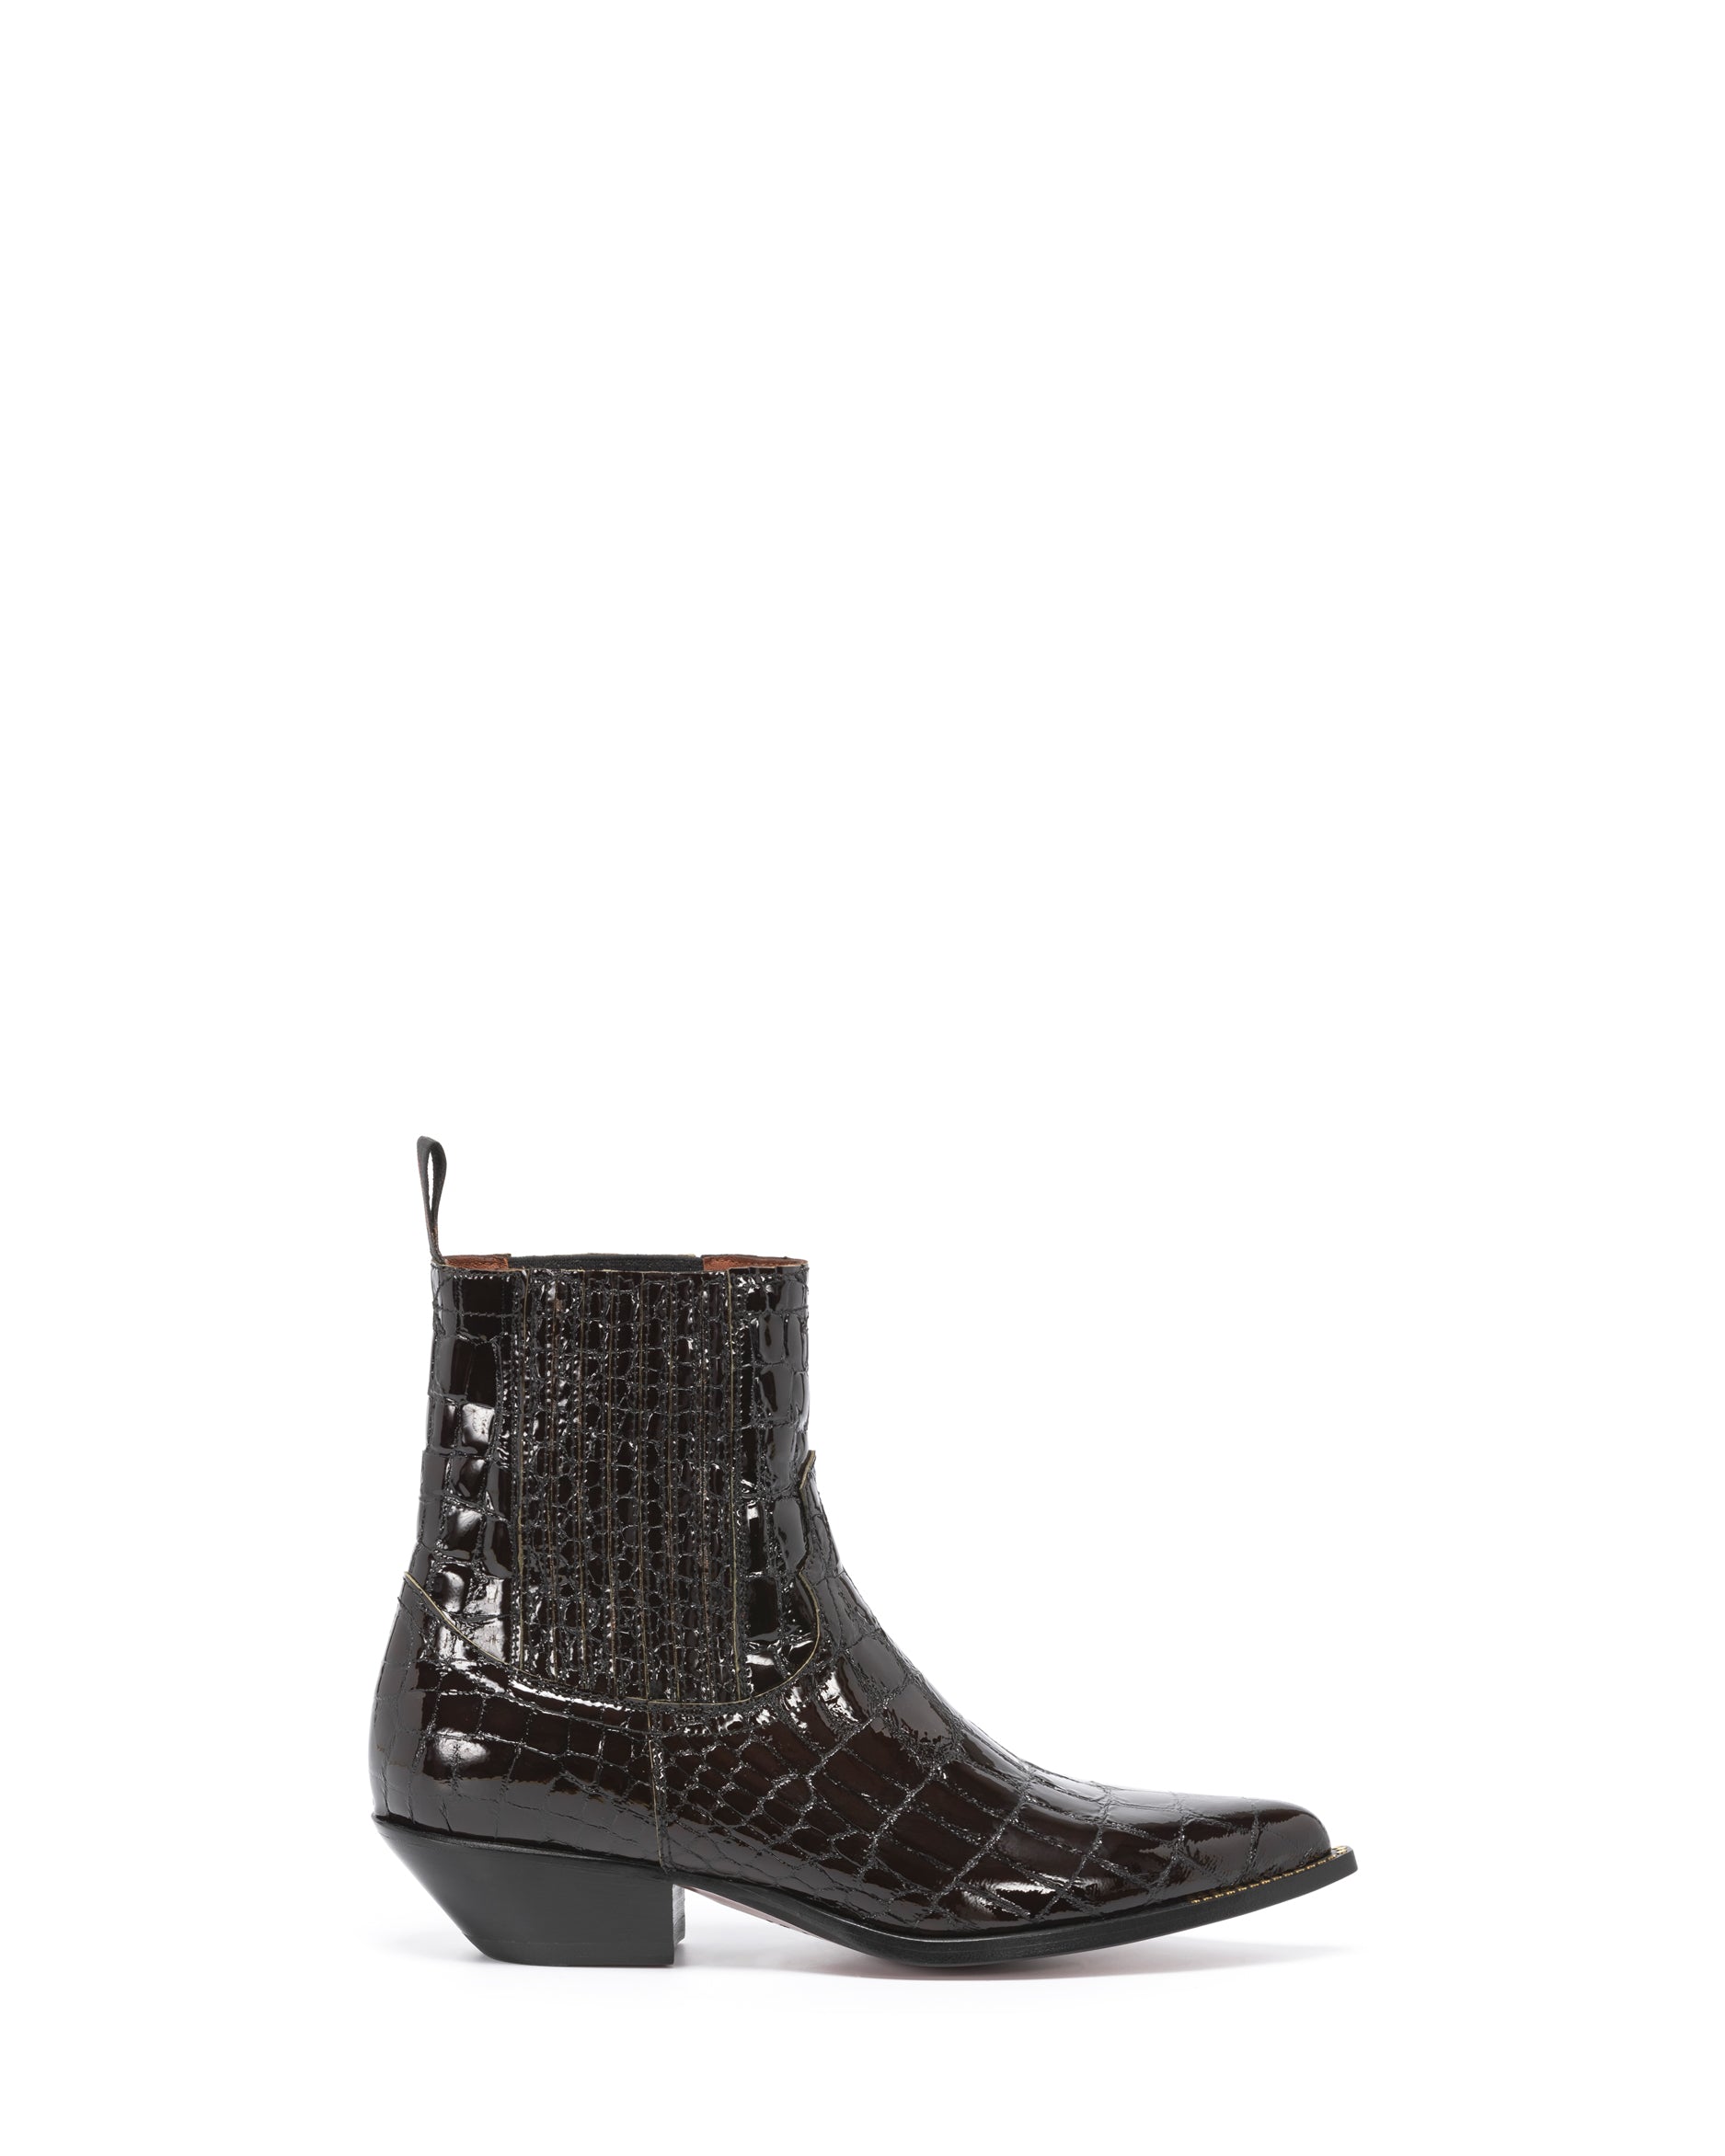 HIDALGO Women's Ankle Boots in Black Croco 01